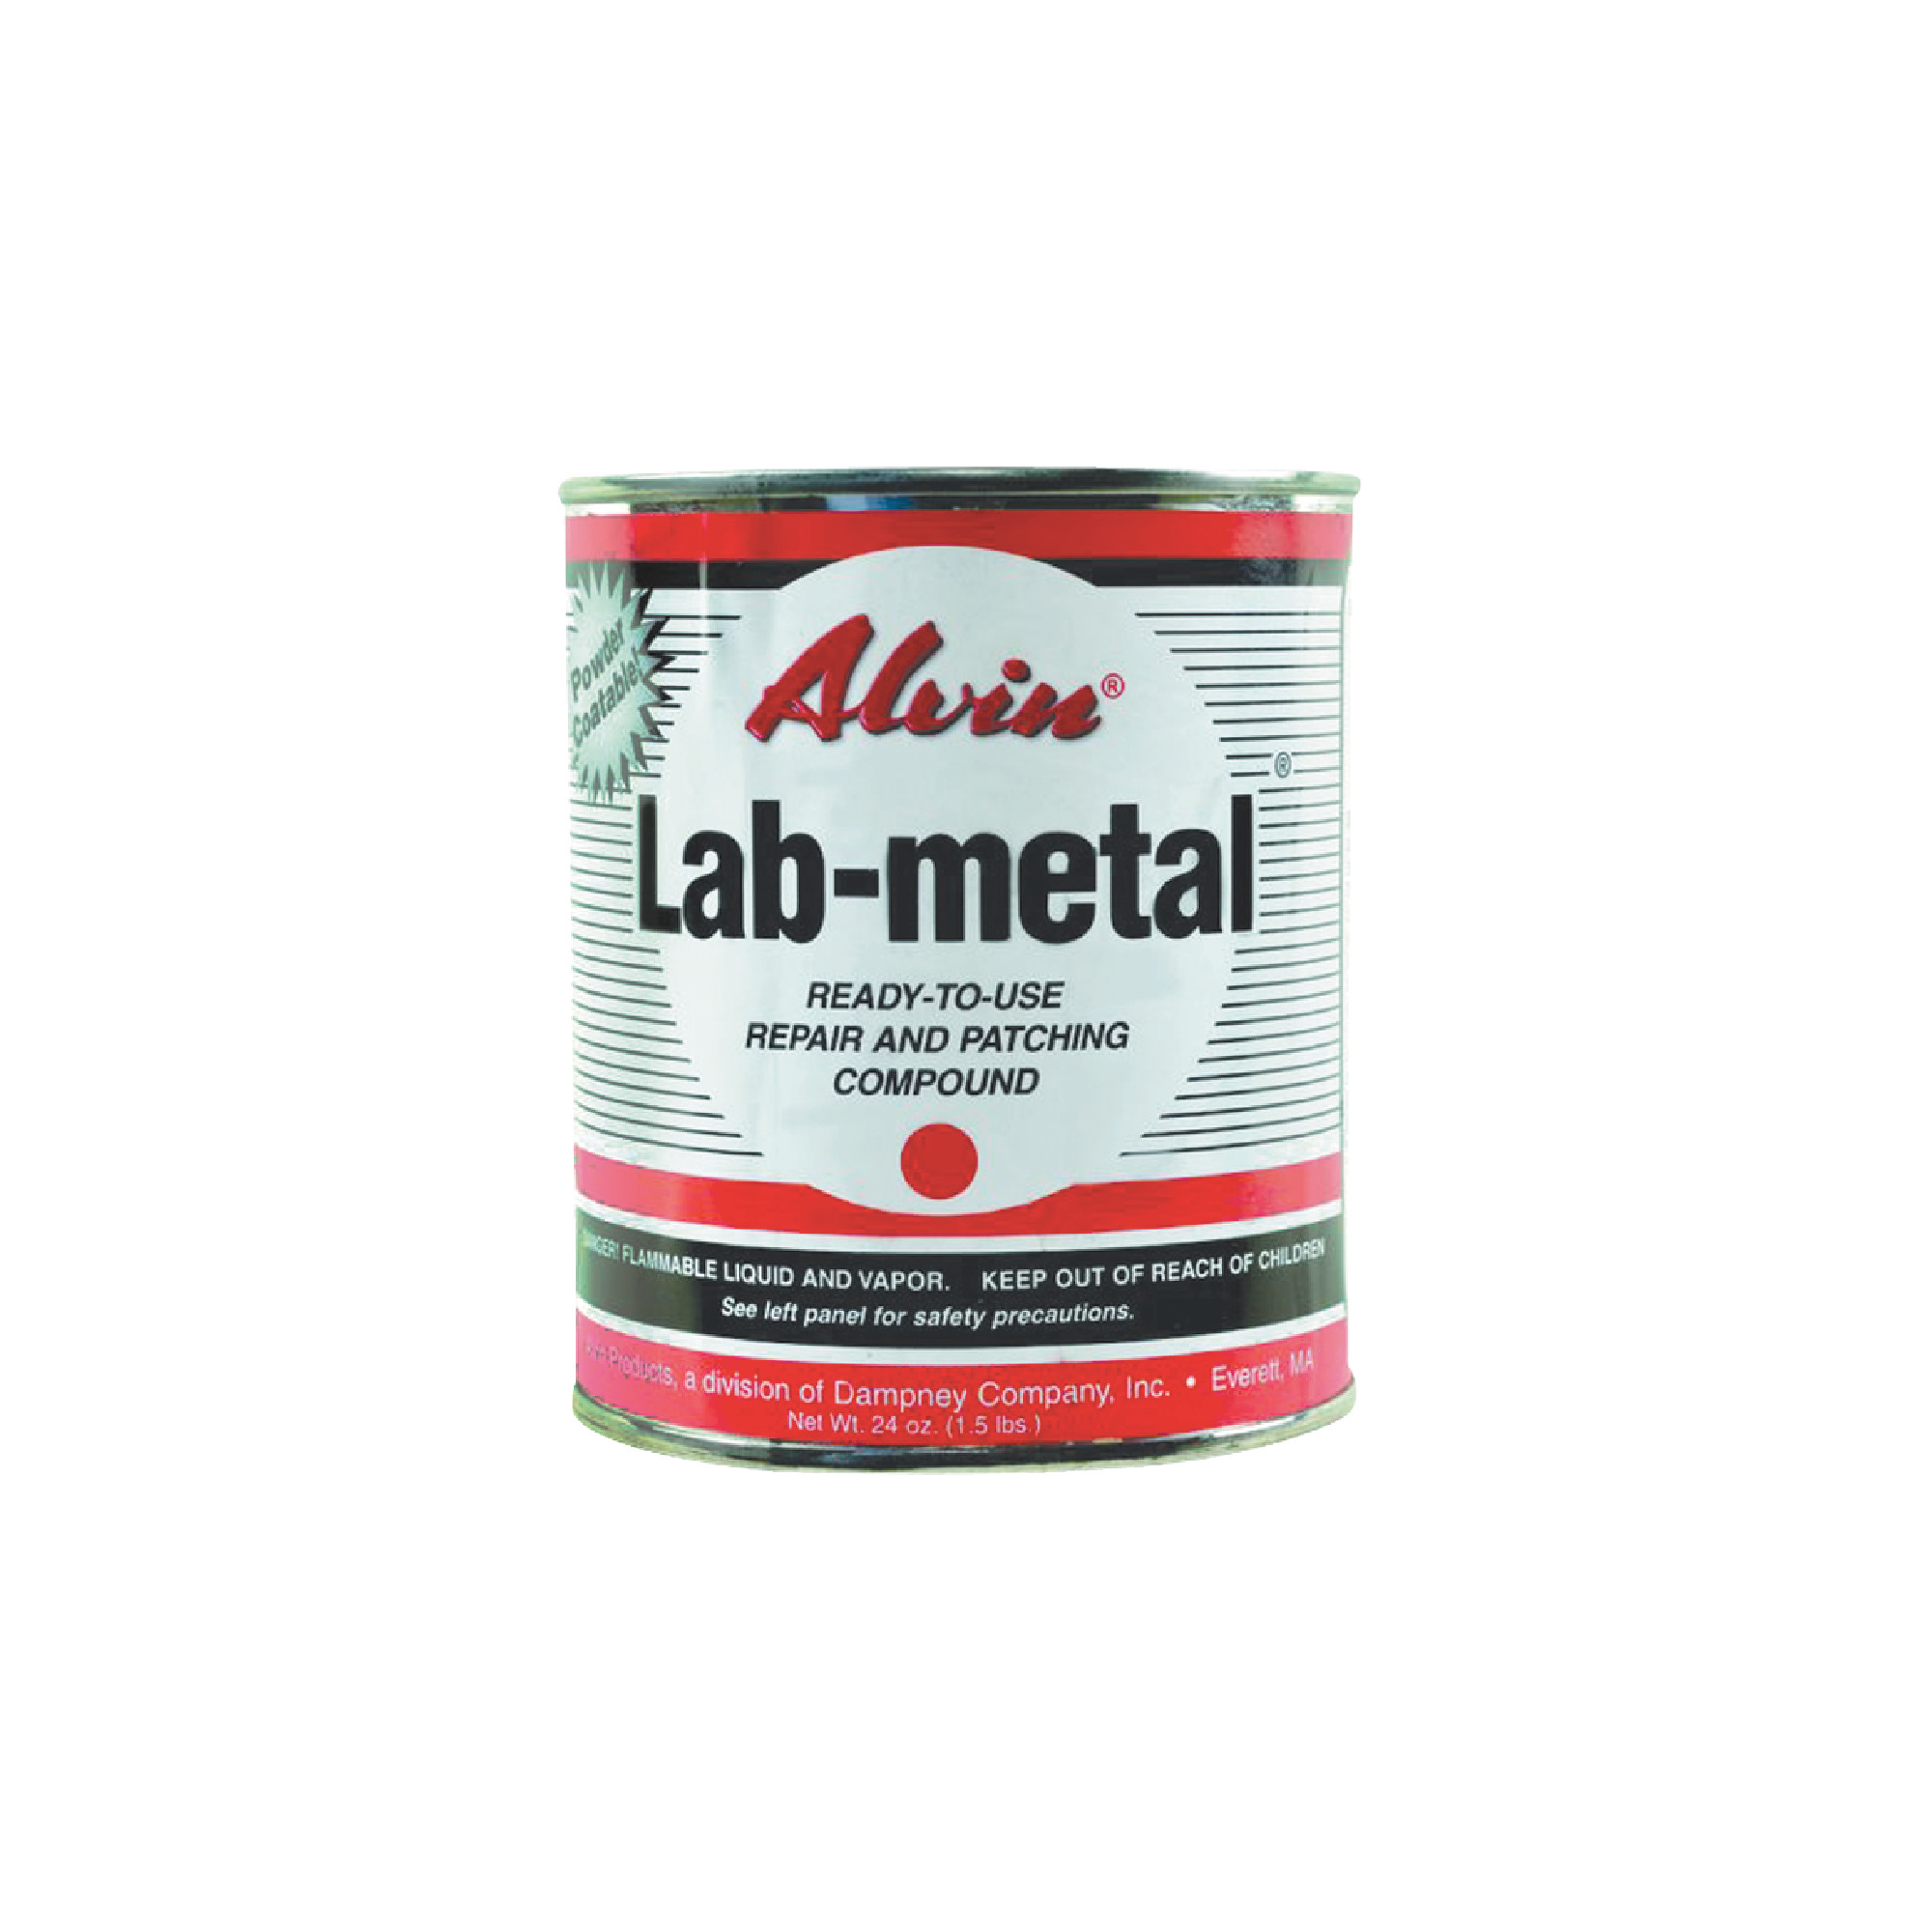 Lab-metal